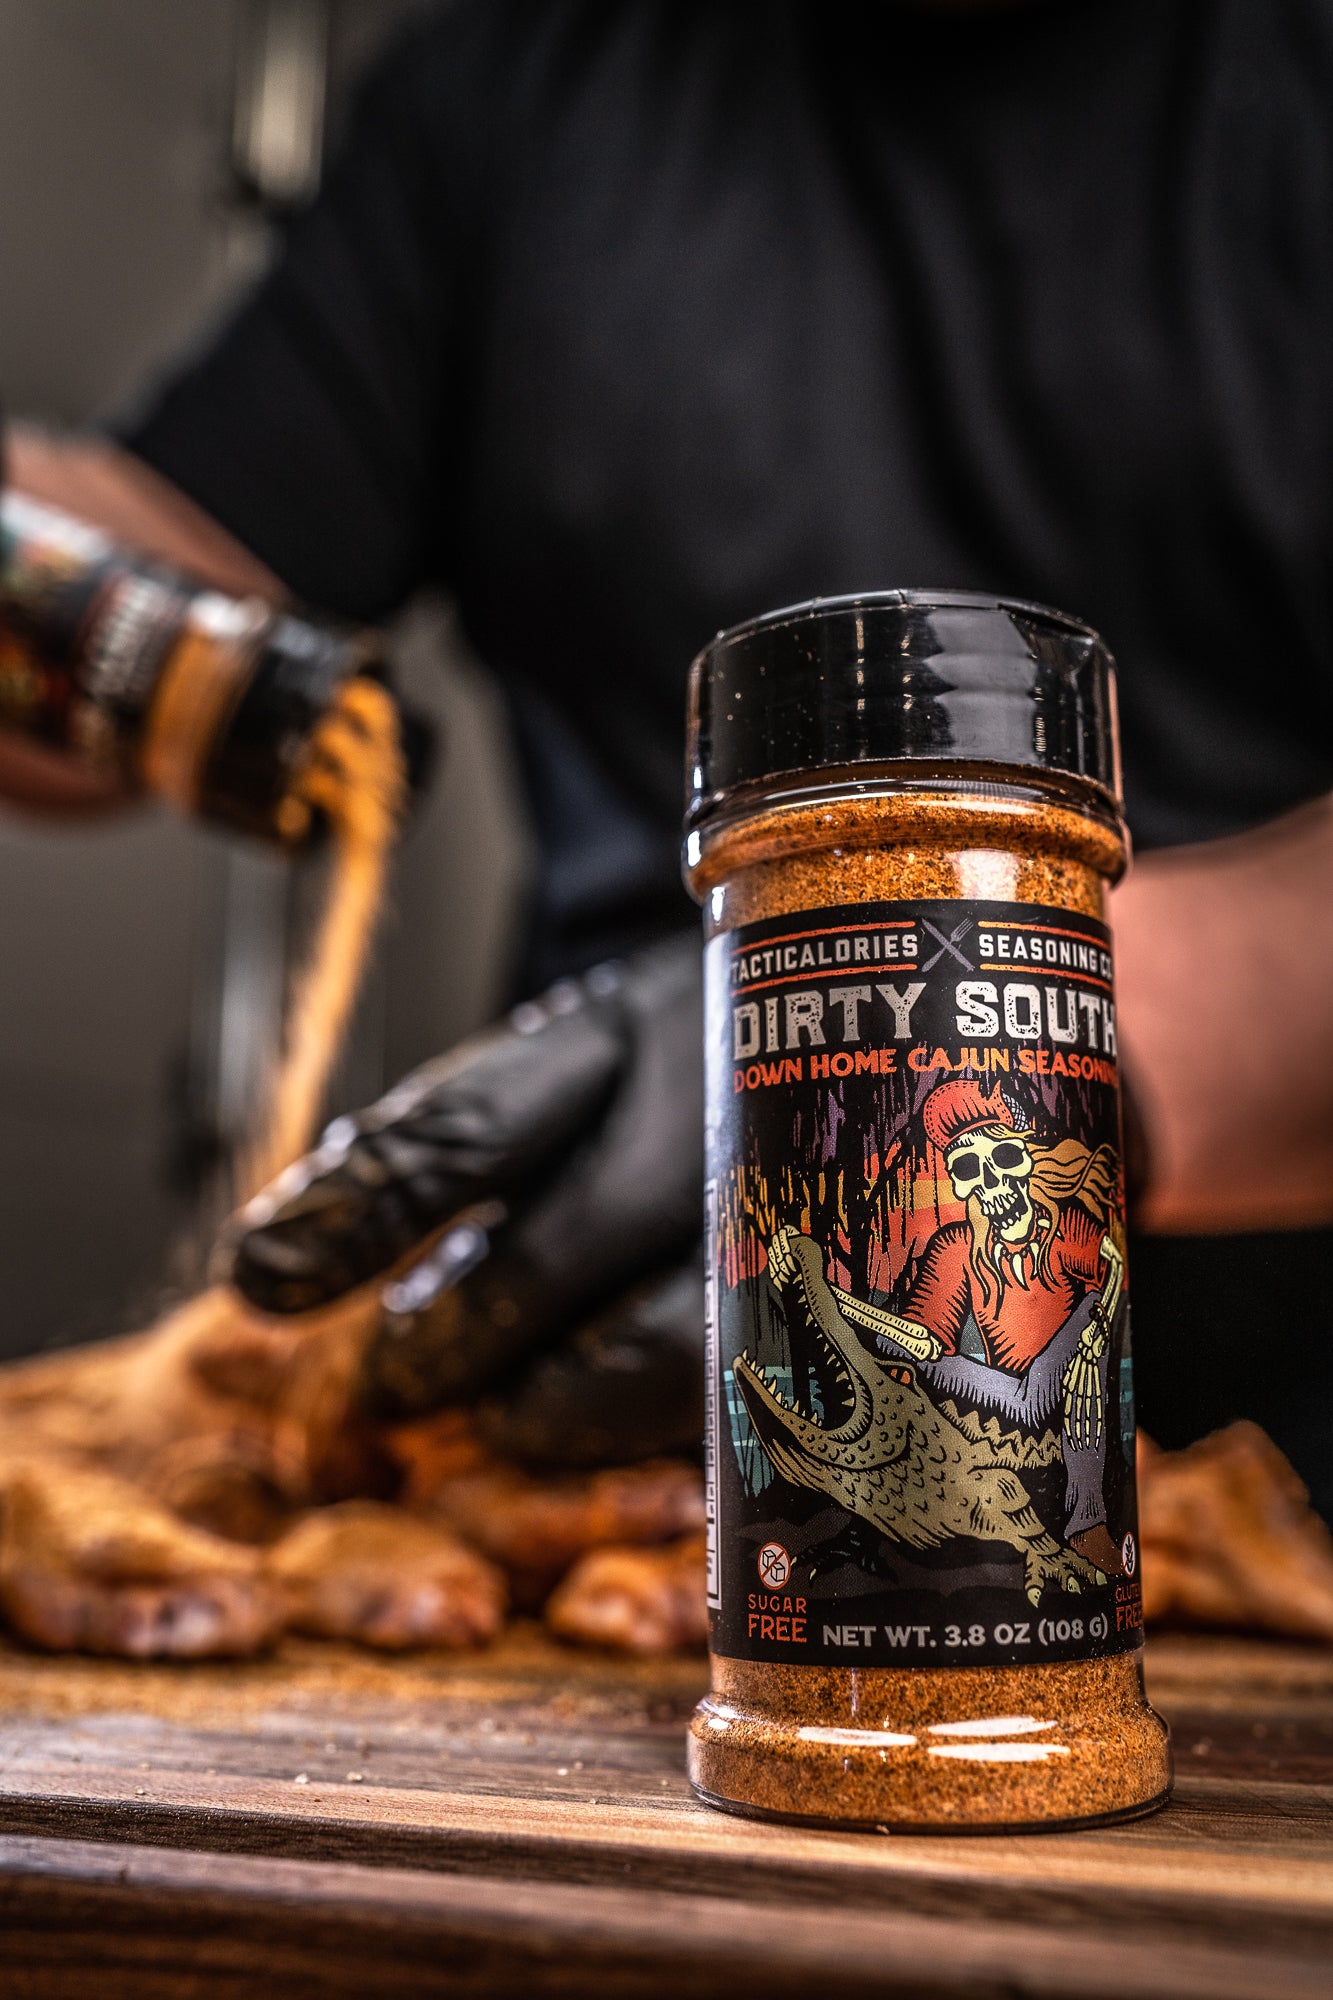 DIRTY SOUTH - Tacticalories Seasoning Company